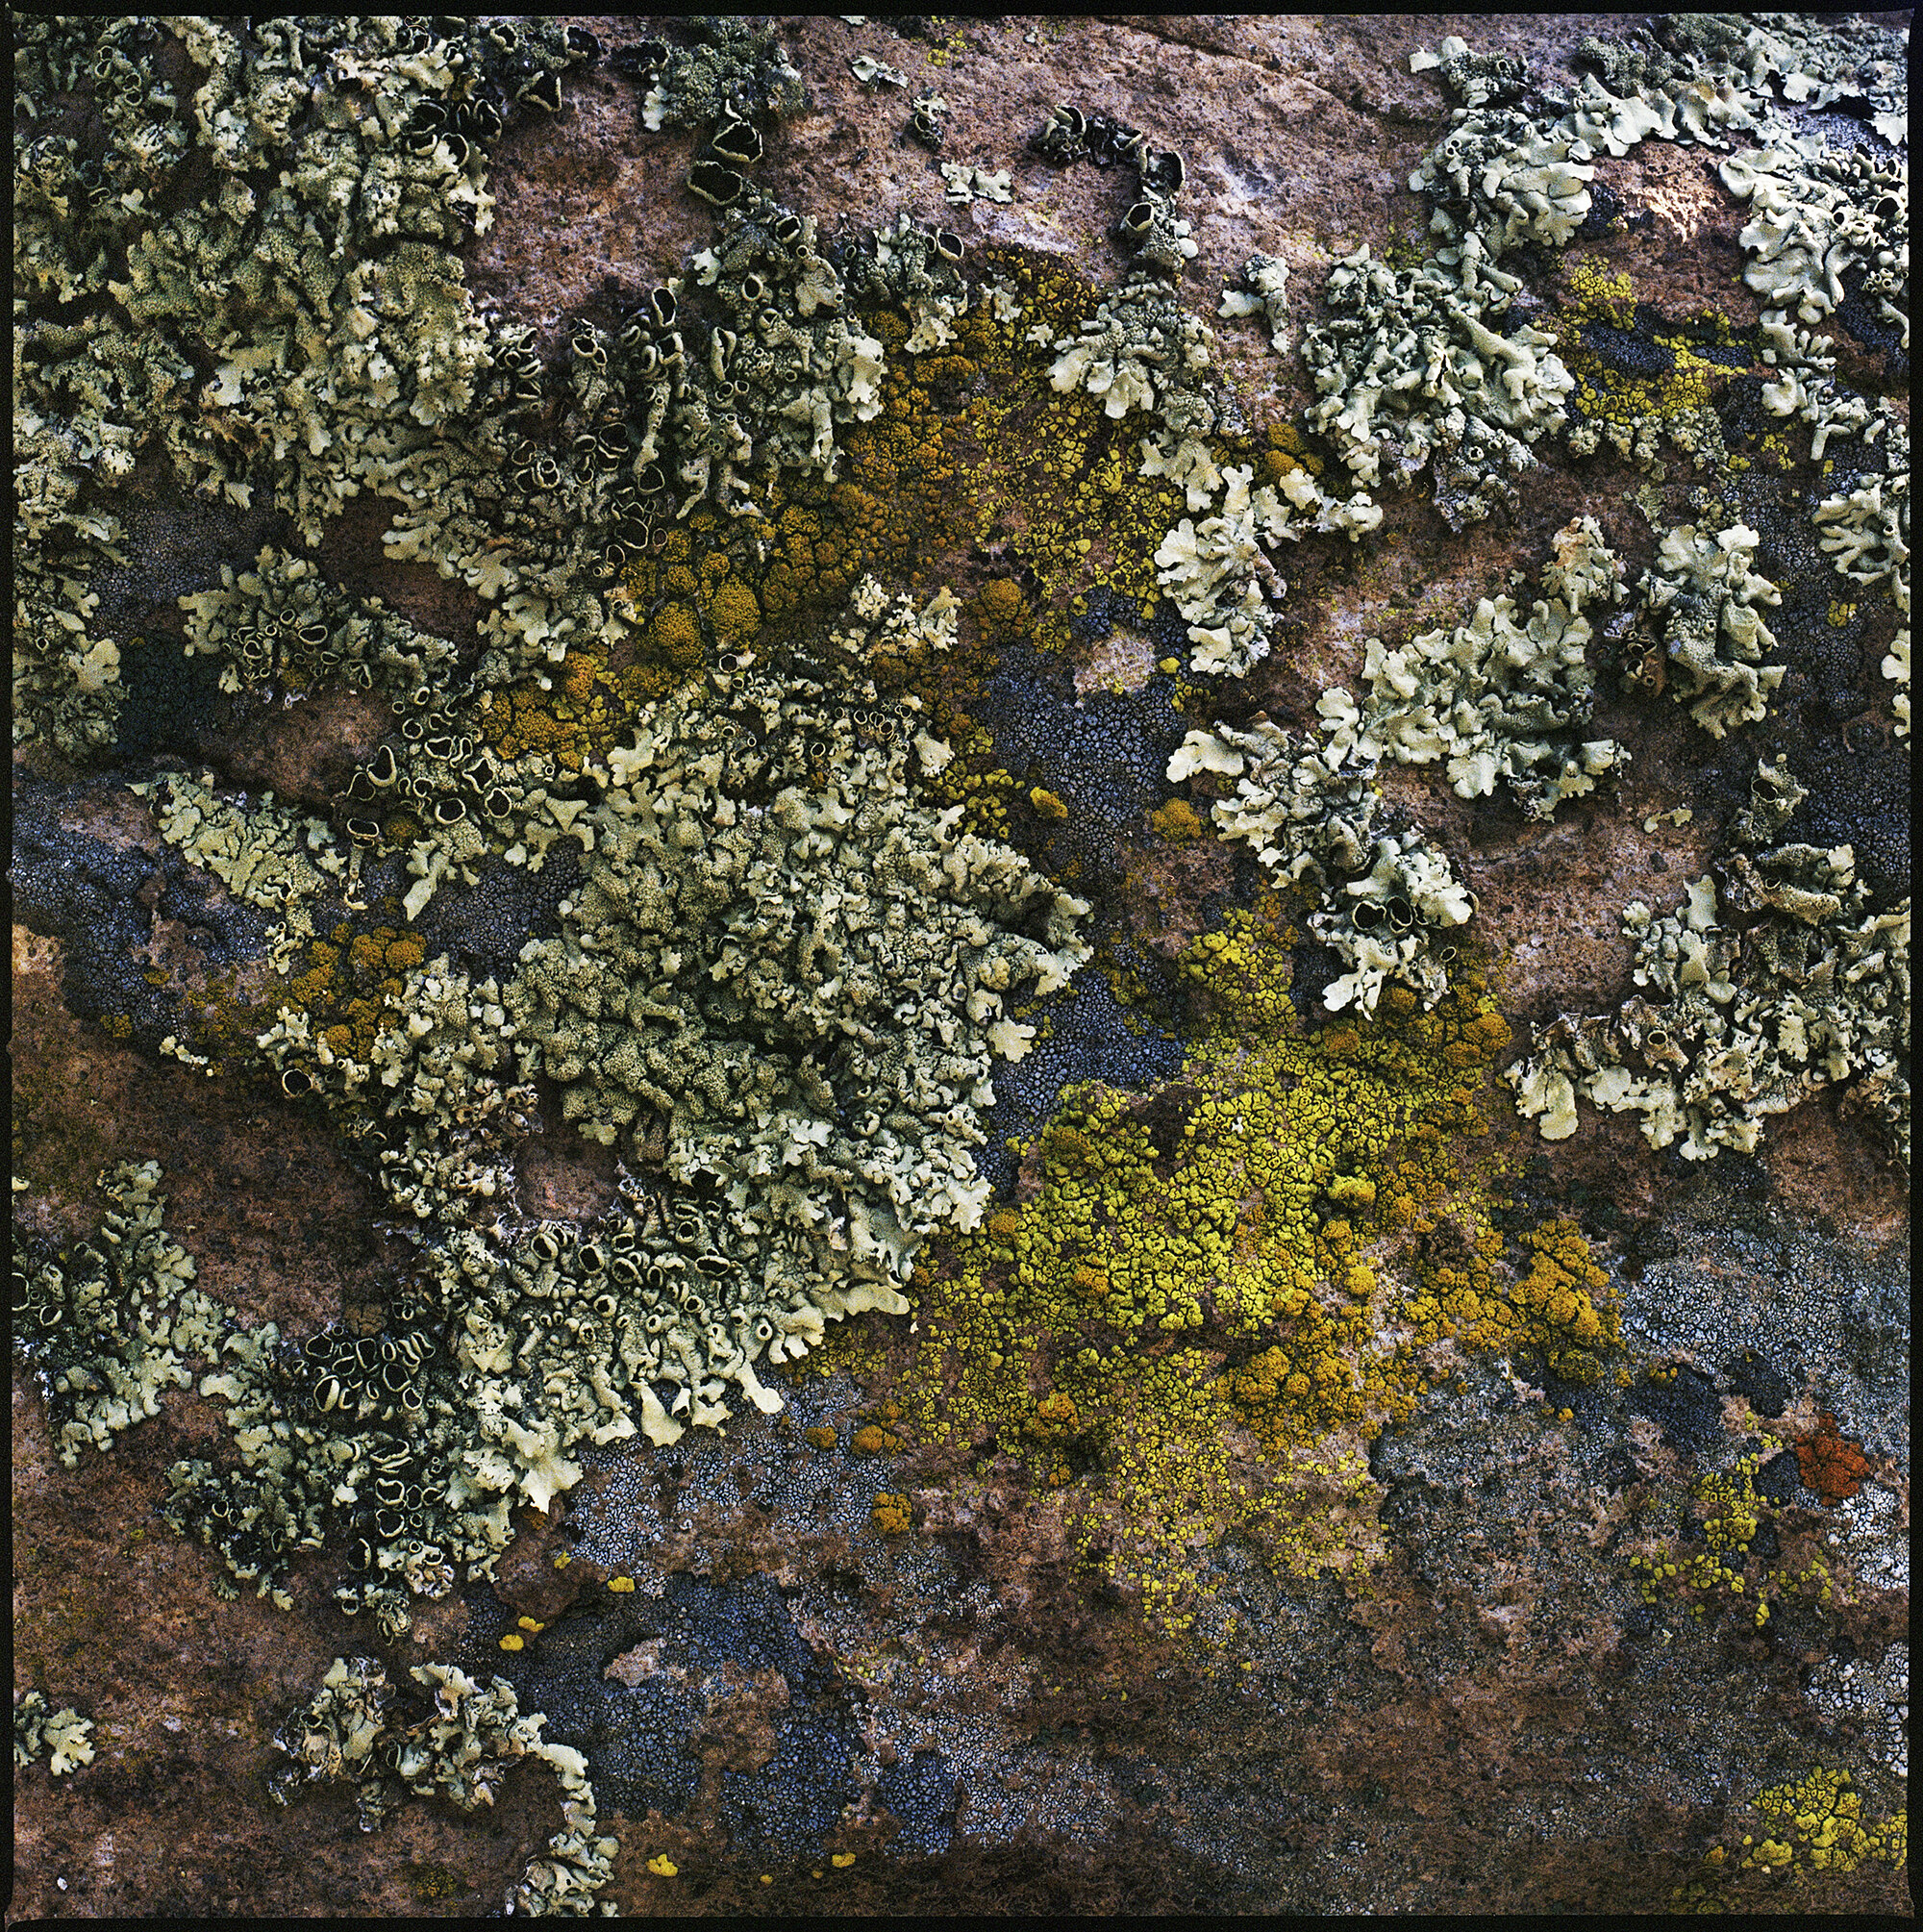  Crustose and foliose lichens, Chi’chil Biłdagoteel (Oak Flat), Arizona 